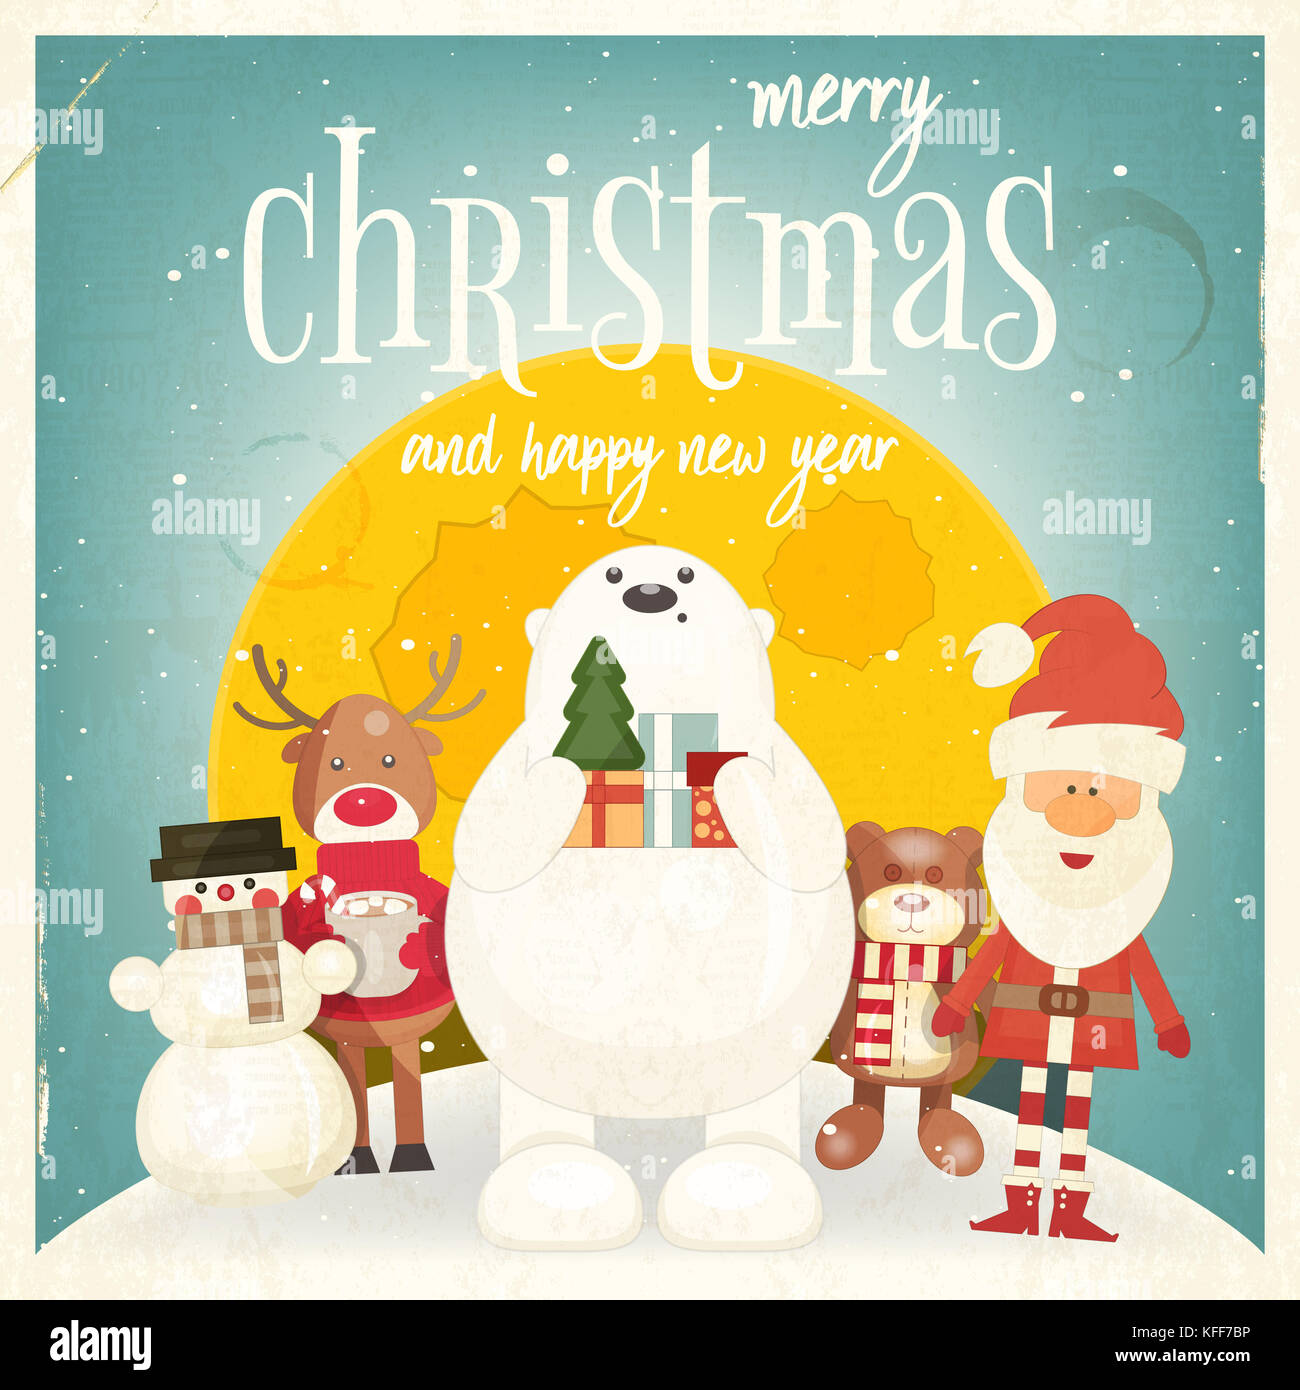 Merry Christmas Retro Greeting Card - Santa Claus and Xmas Characters. Illustration. Square Format. Stock Photo